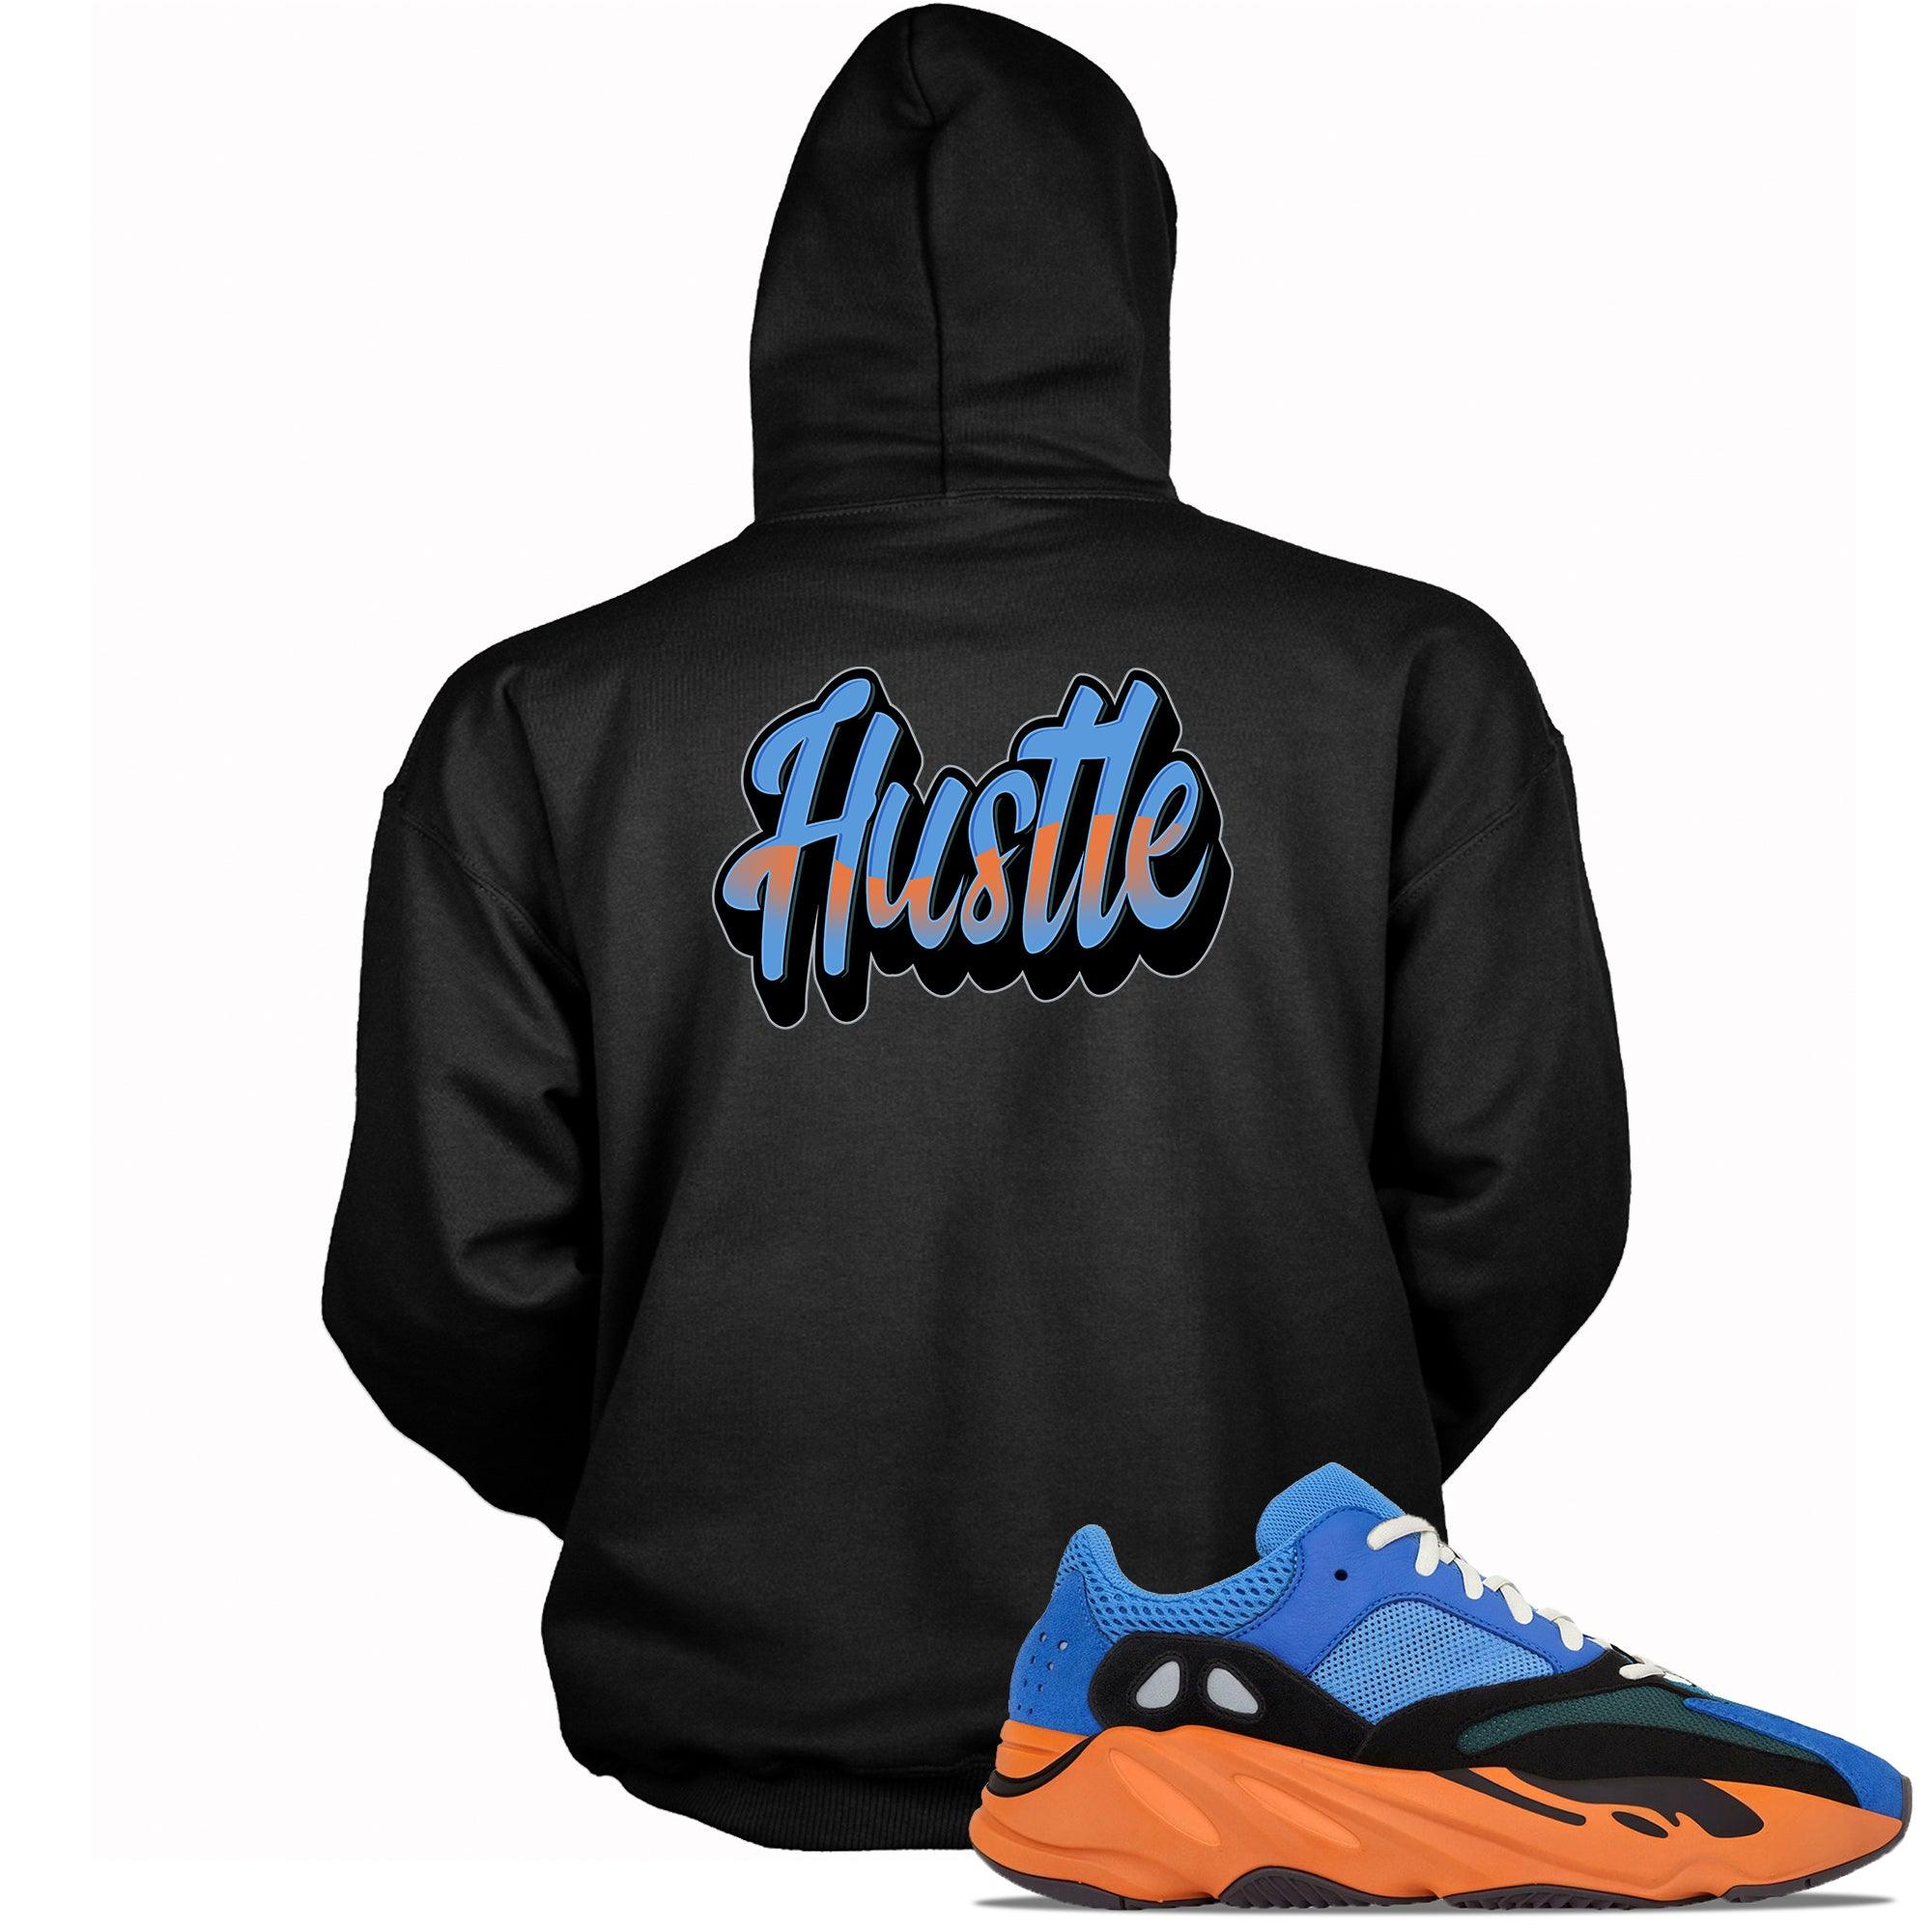 Black Hustle Hoodie Yeezy Boost 700s Bright Blue photo